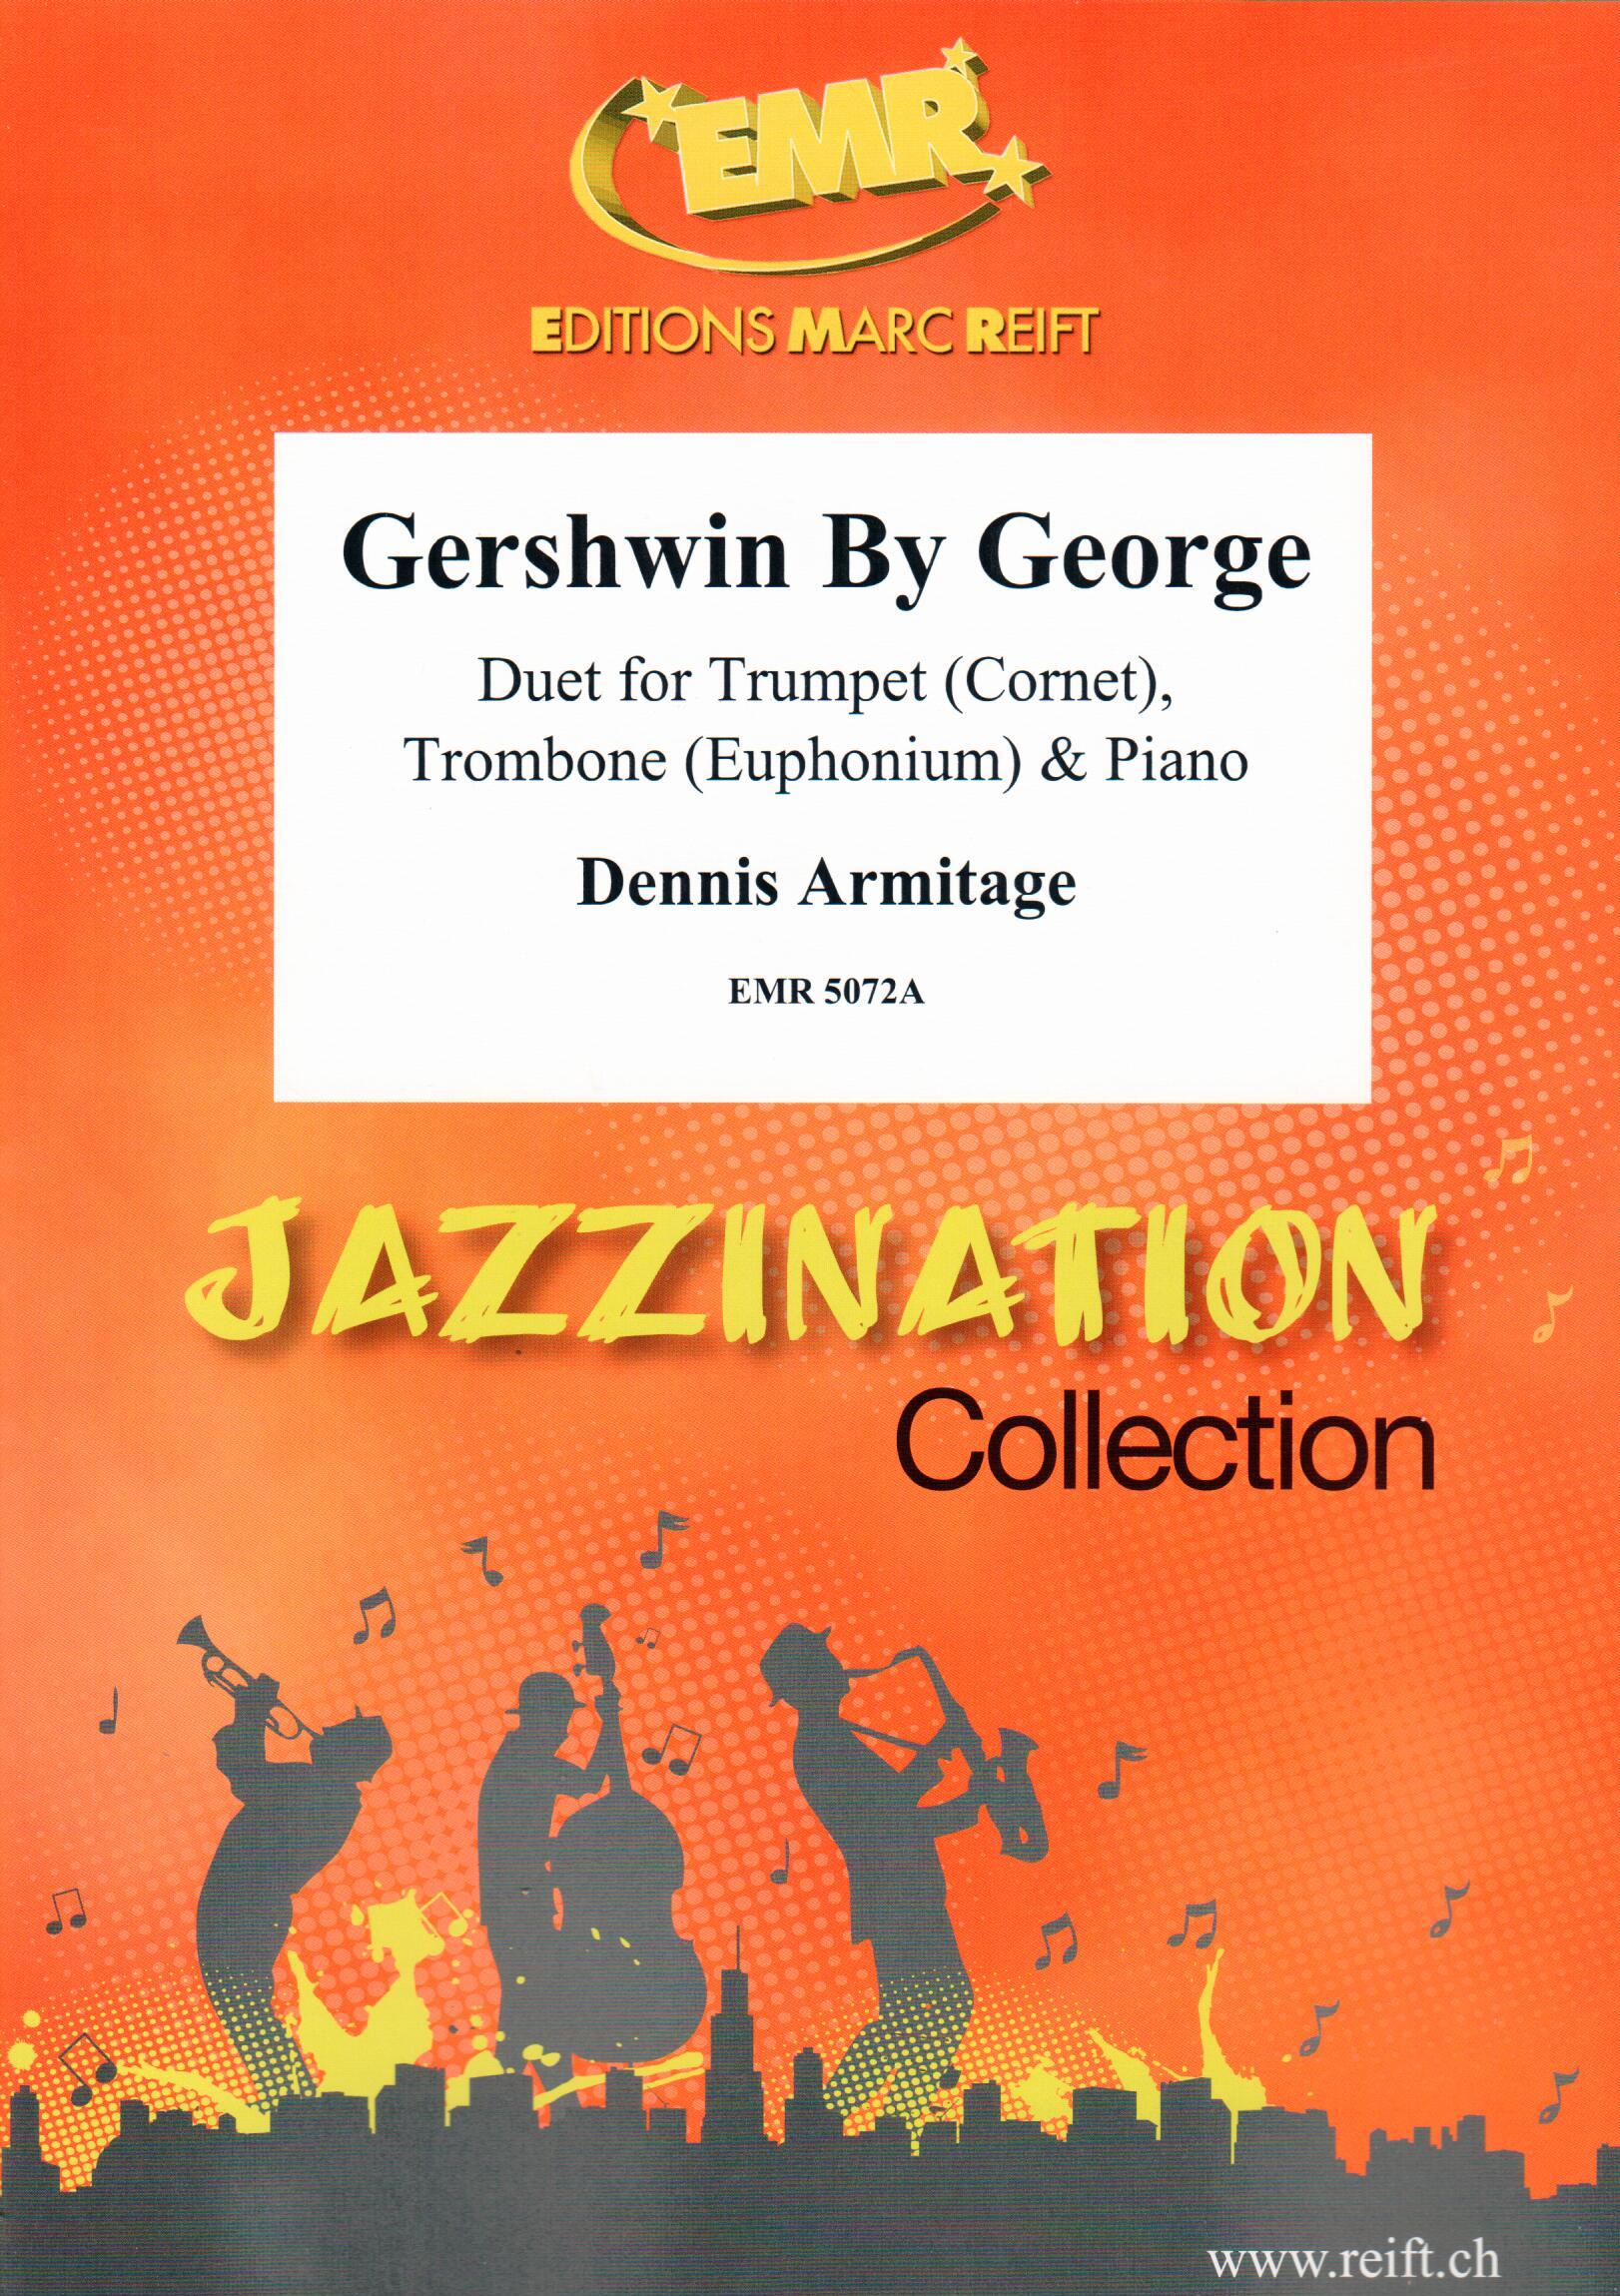 GERSHWIN BY GEORGE, Duets